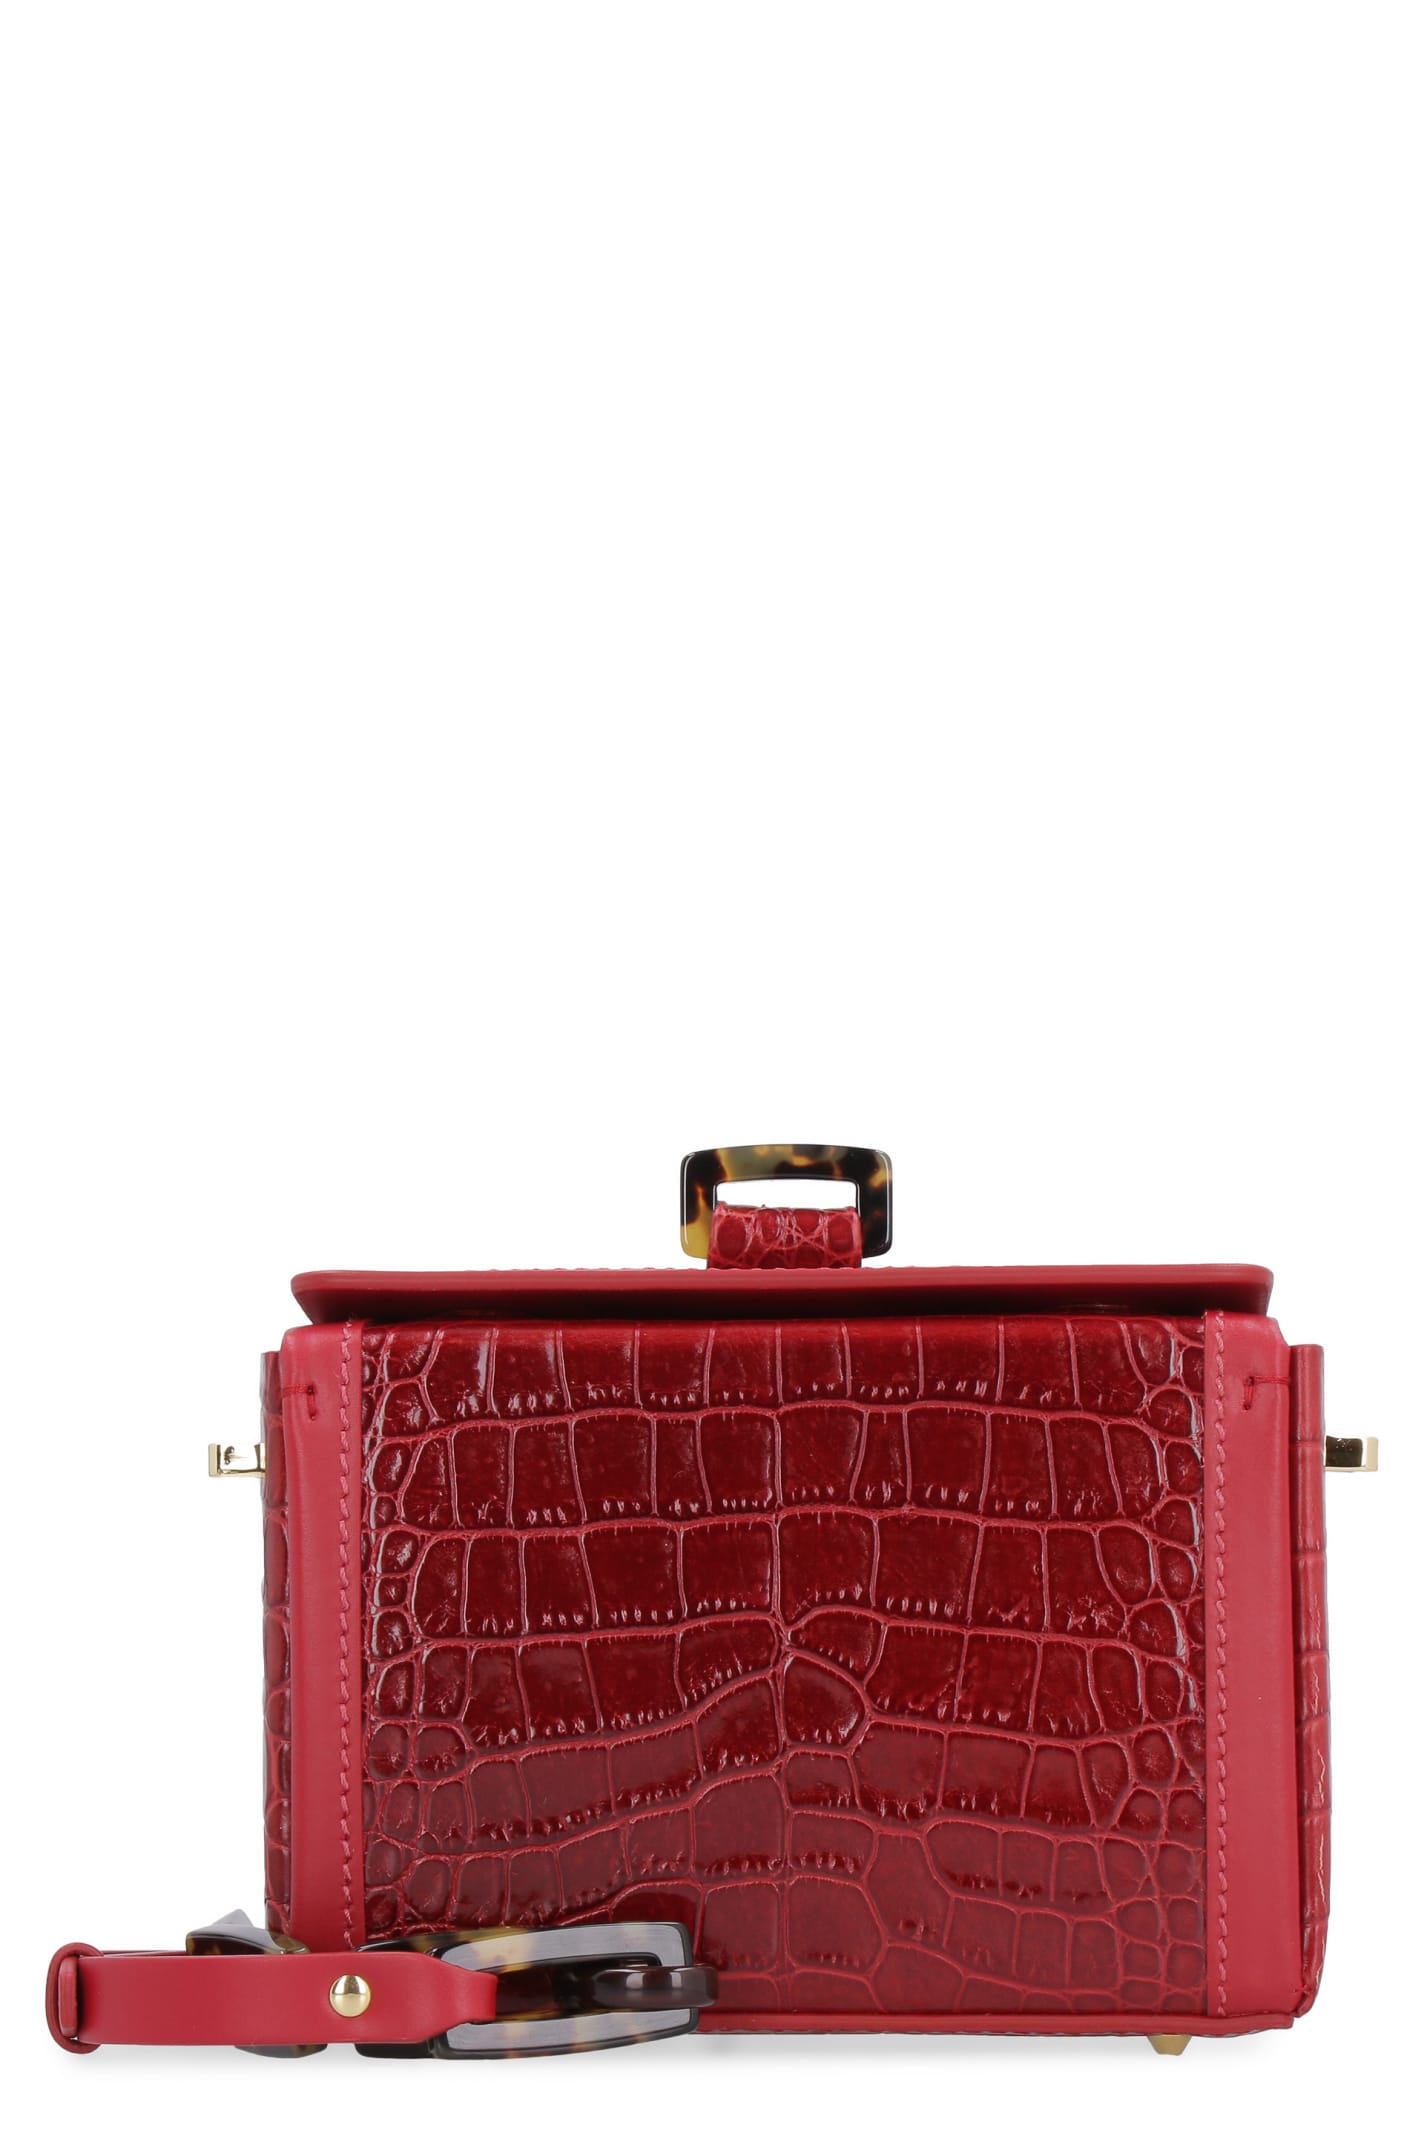 Nico Giani Cerea Crocodile Print Leather Bag In Red